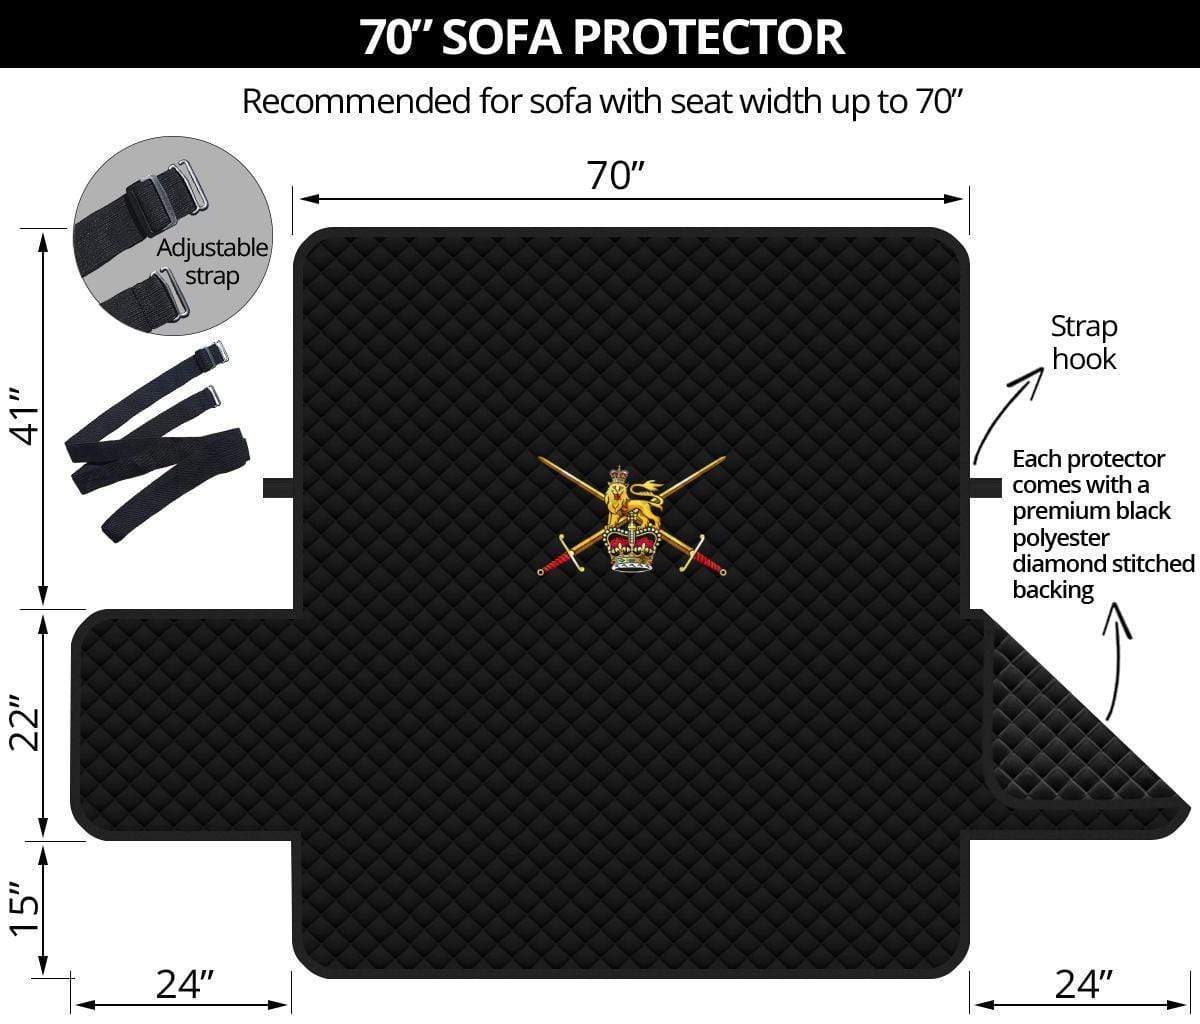 sofa protector 70" British Army 3-Seat Sofa Protector